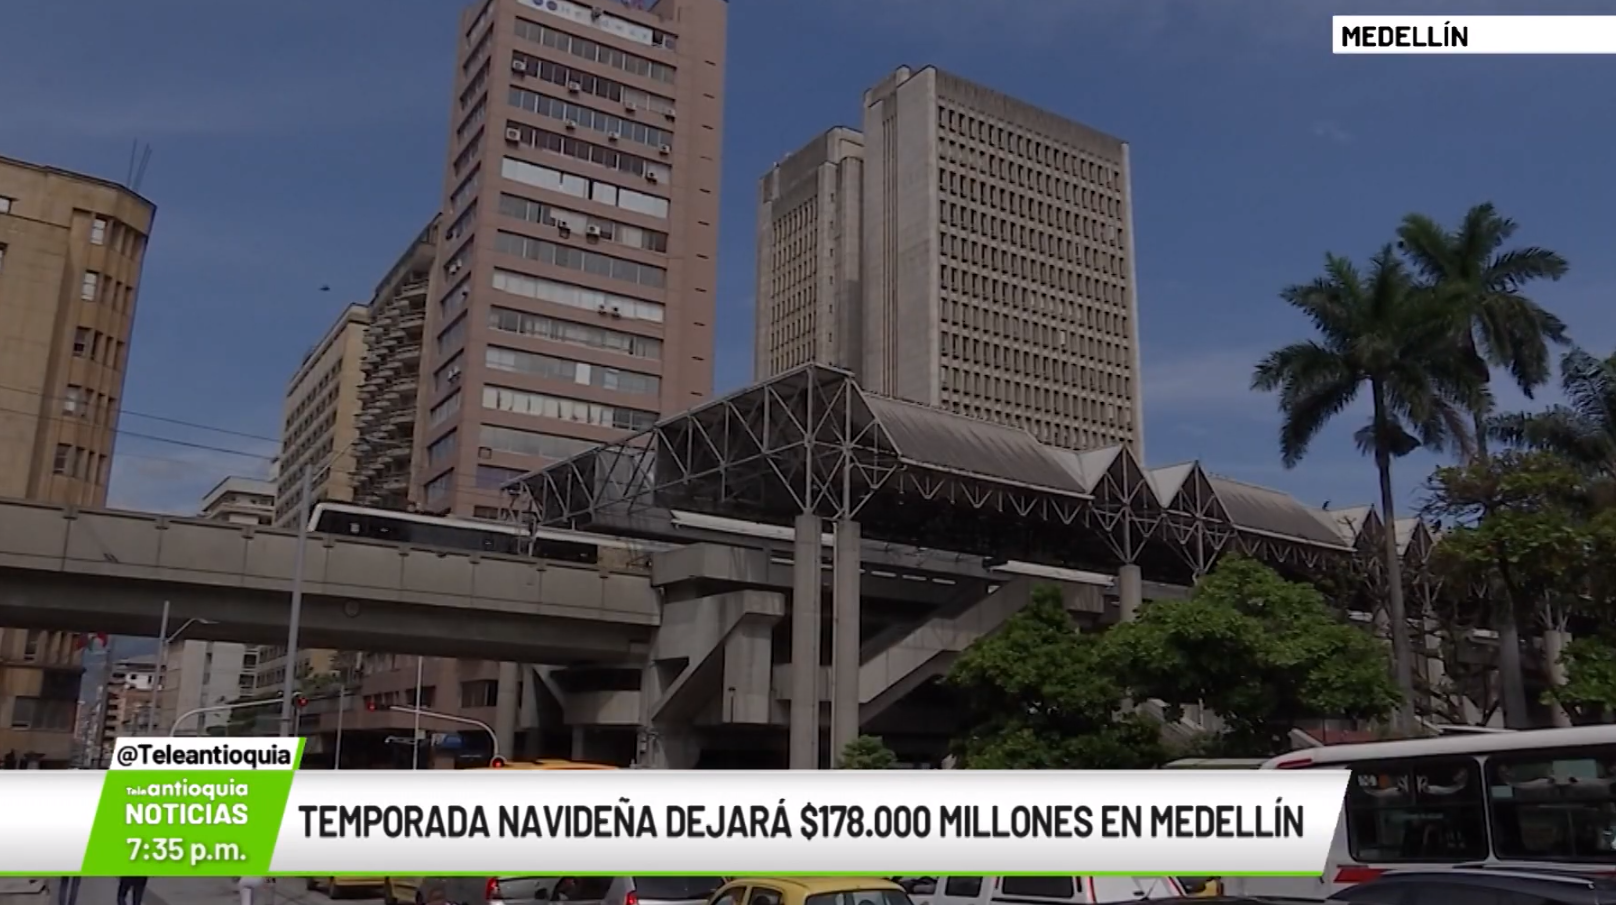 Temporada navideña dejará $178.000 millones en Medellín